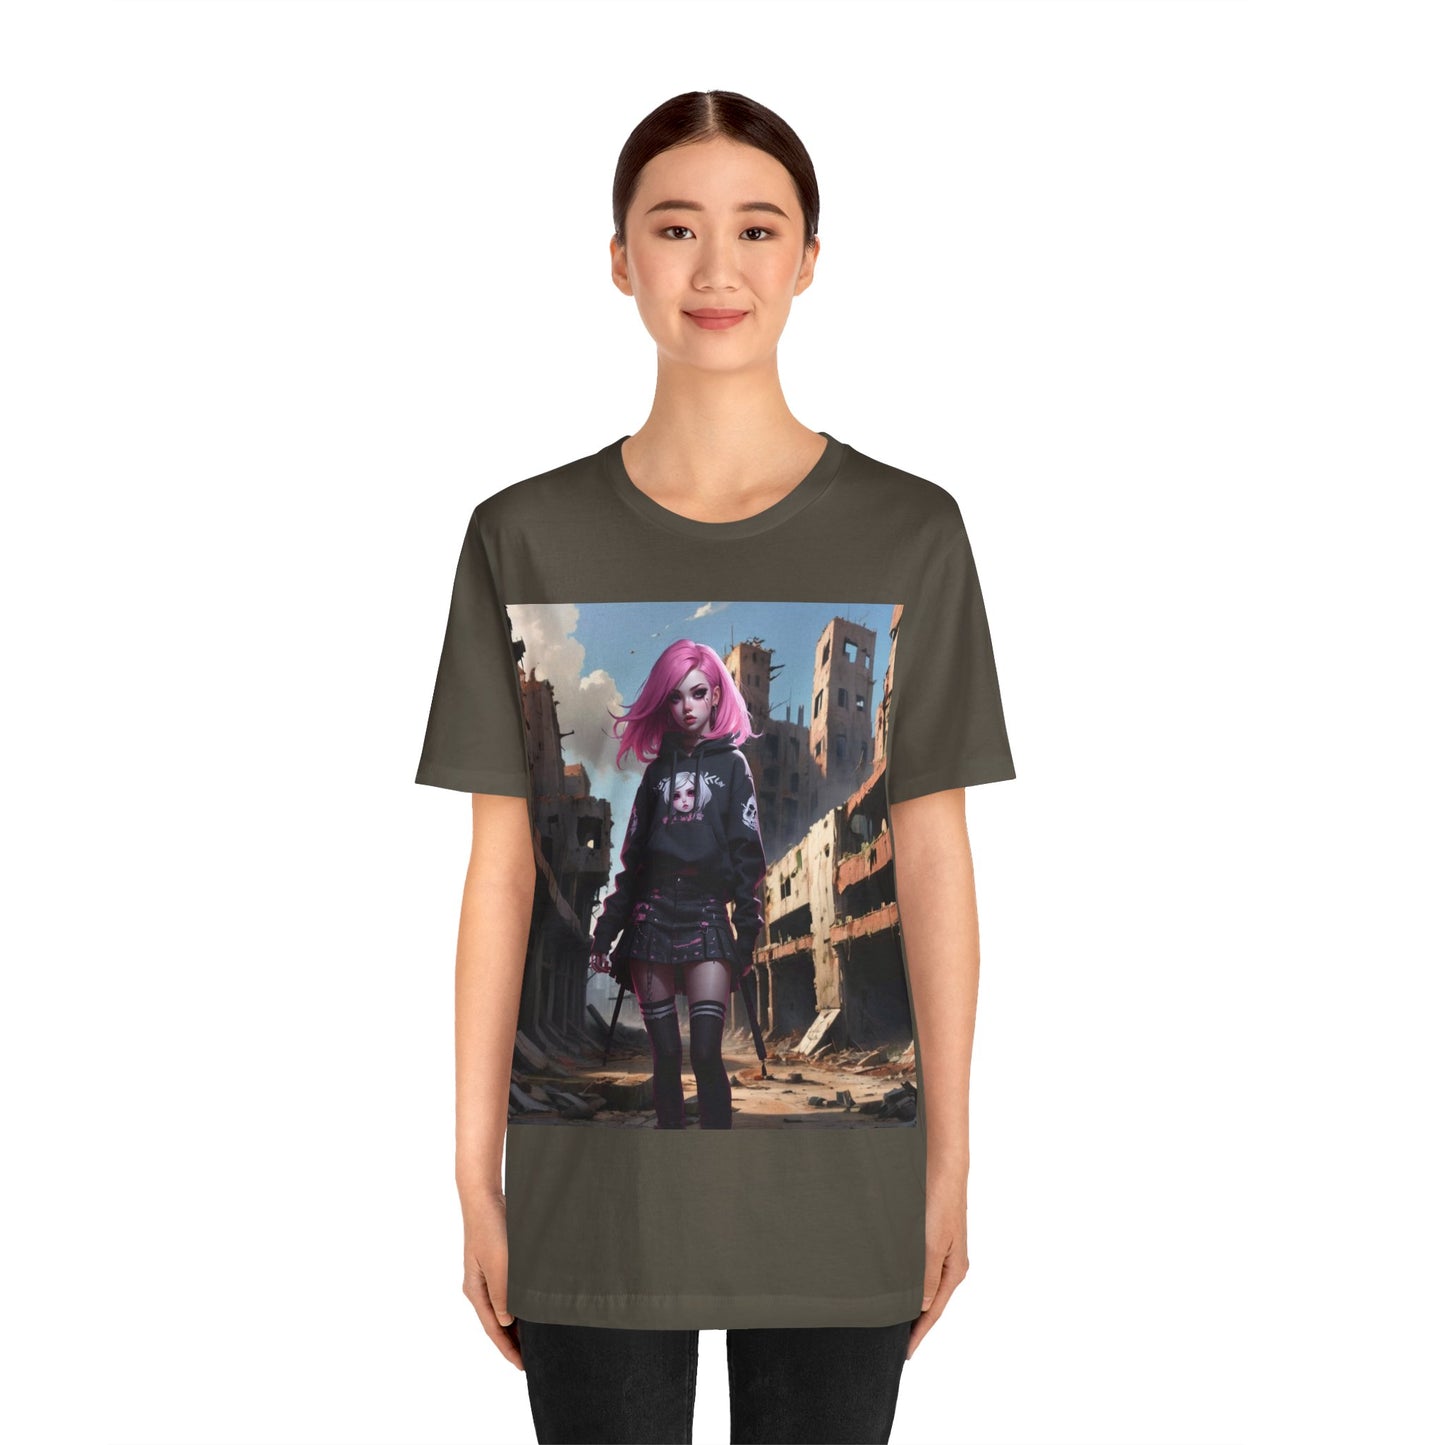 Apocalypse Now | HD Graphic | Dystopia | Pastel Goth | Unisex | Men's | Women's | Tee | T-Shirt